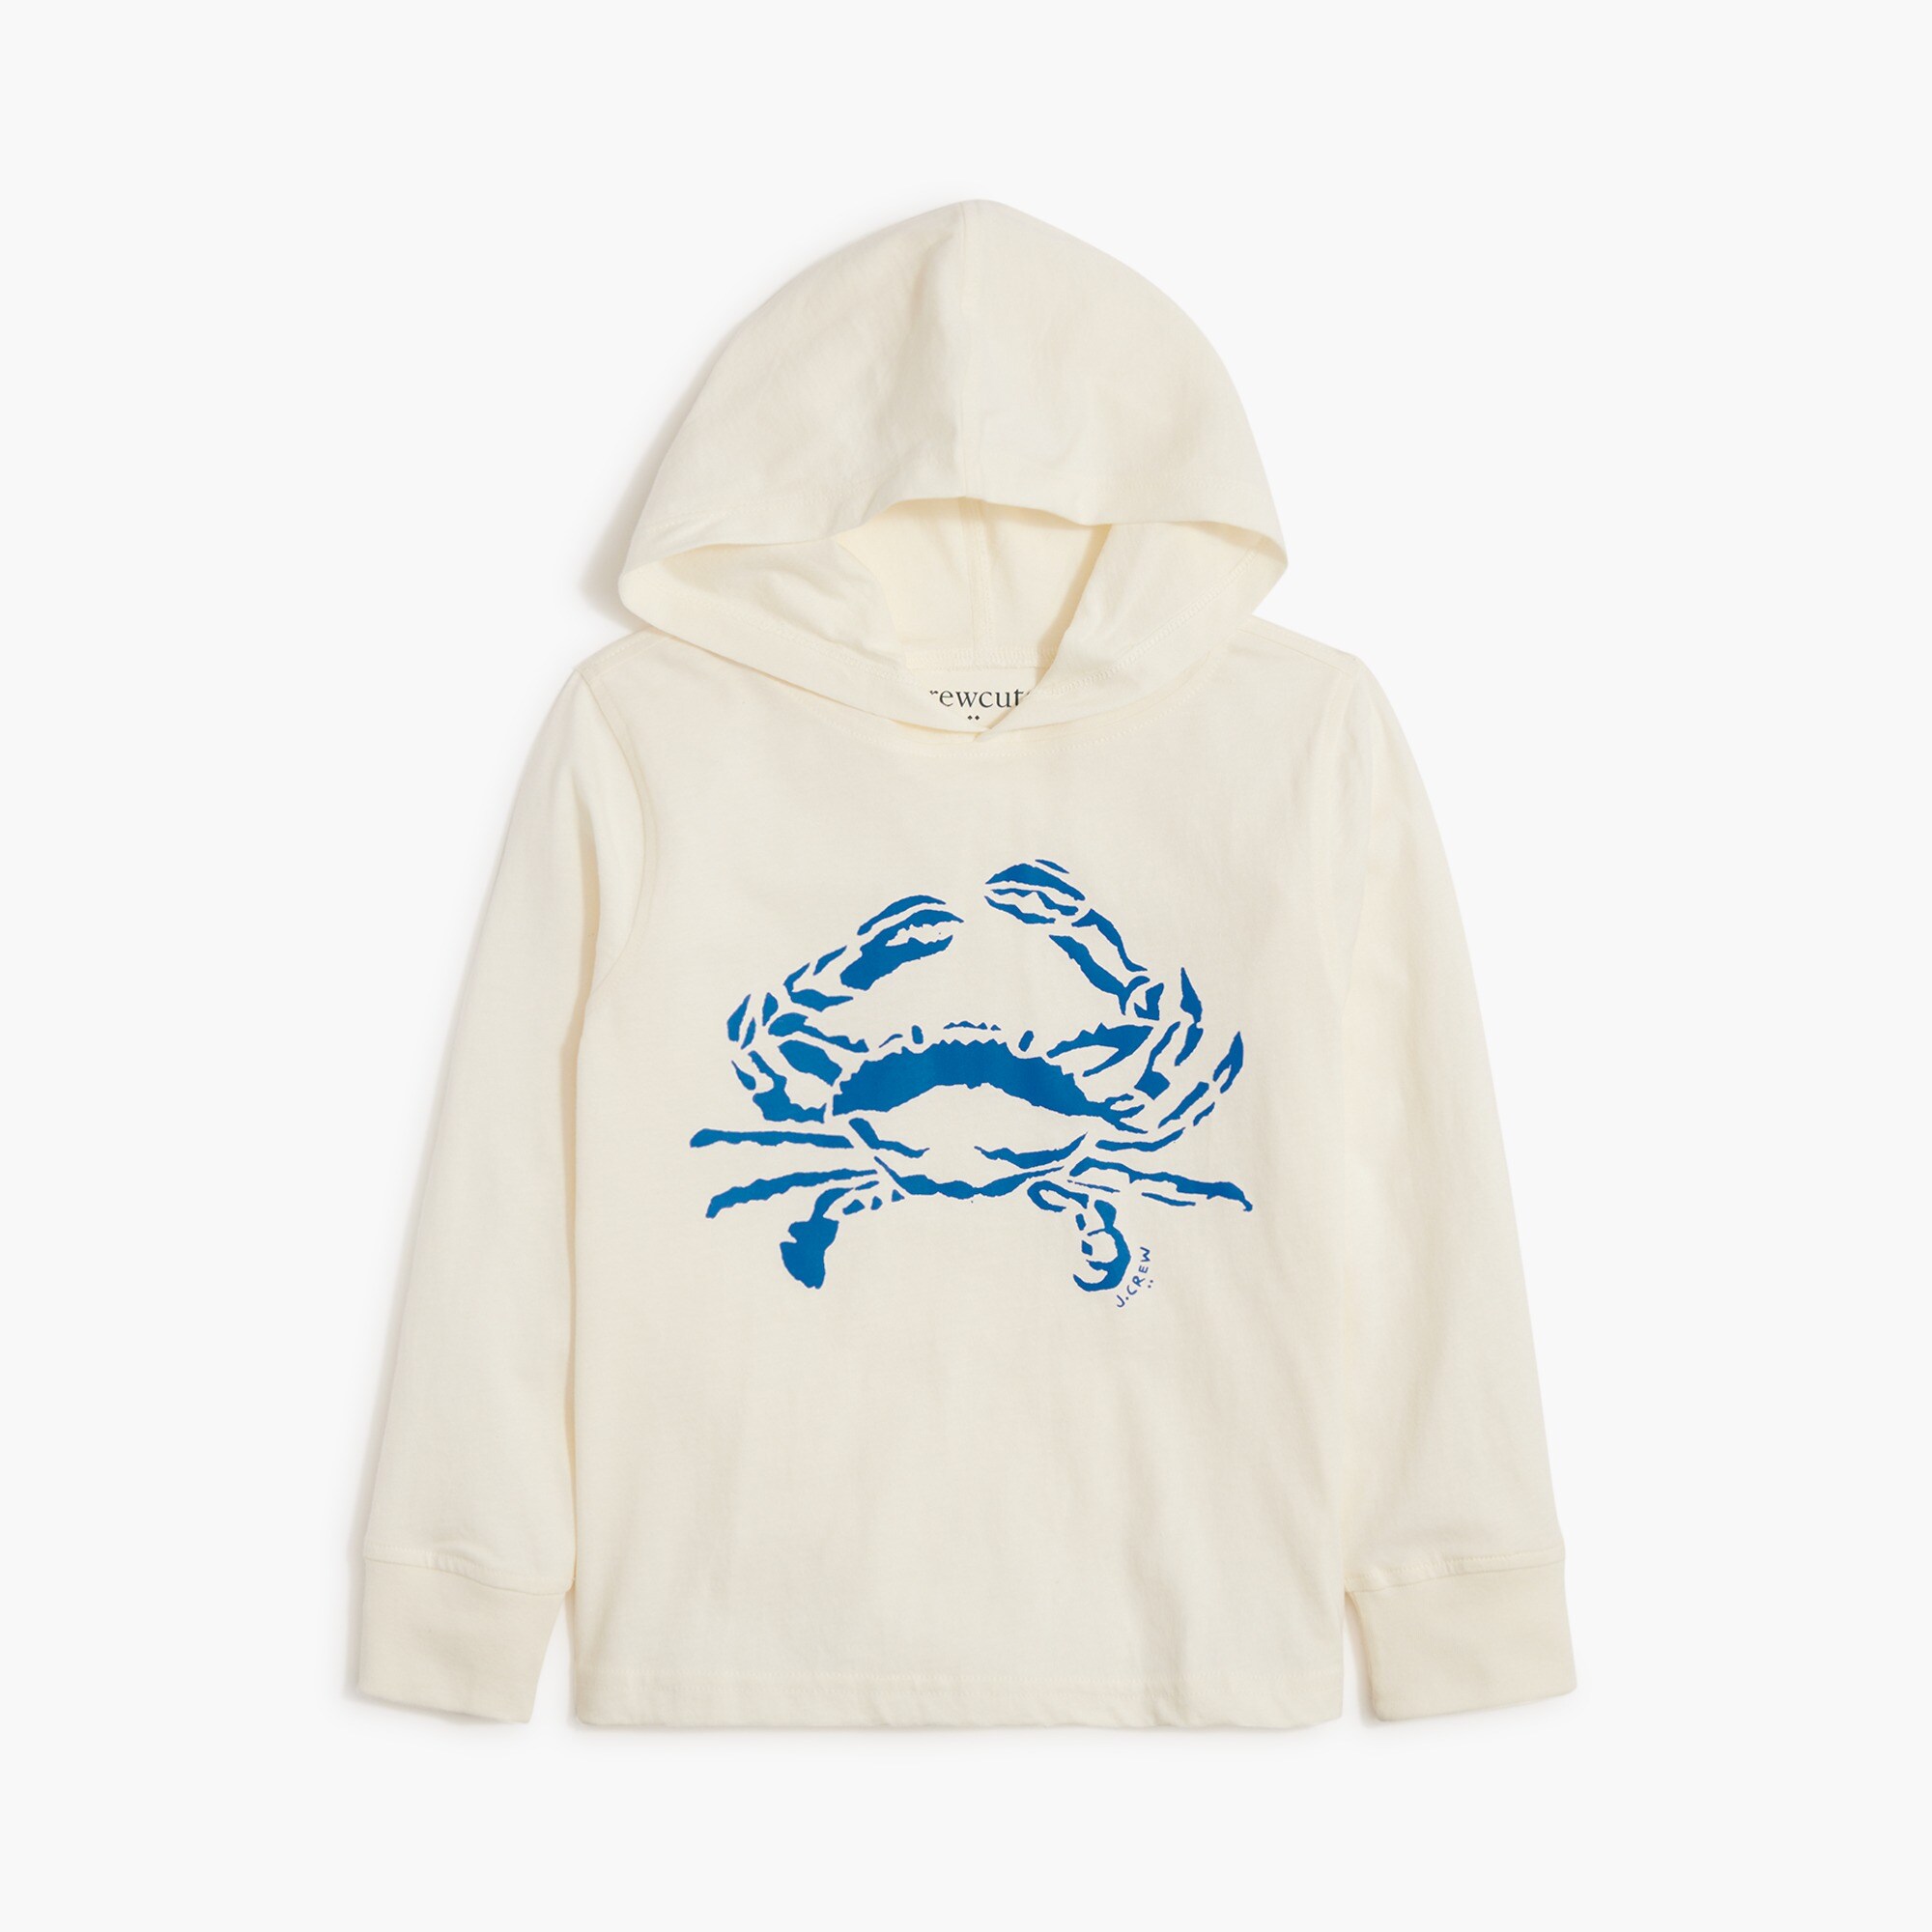  Boys' crab jersey hooded tee